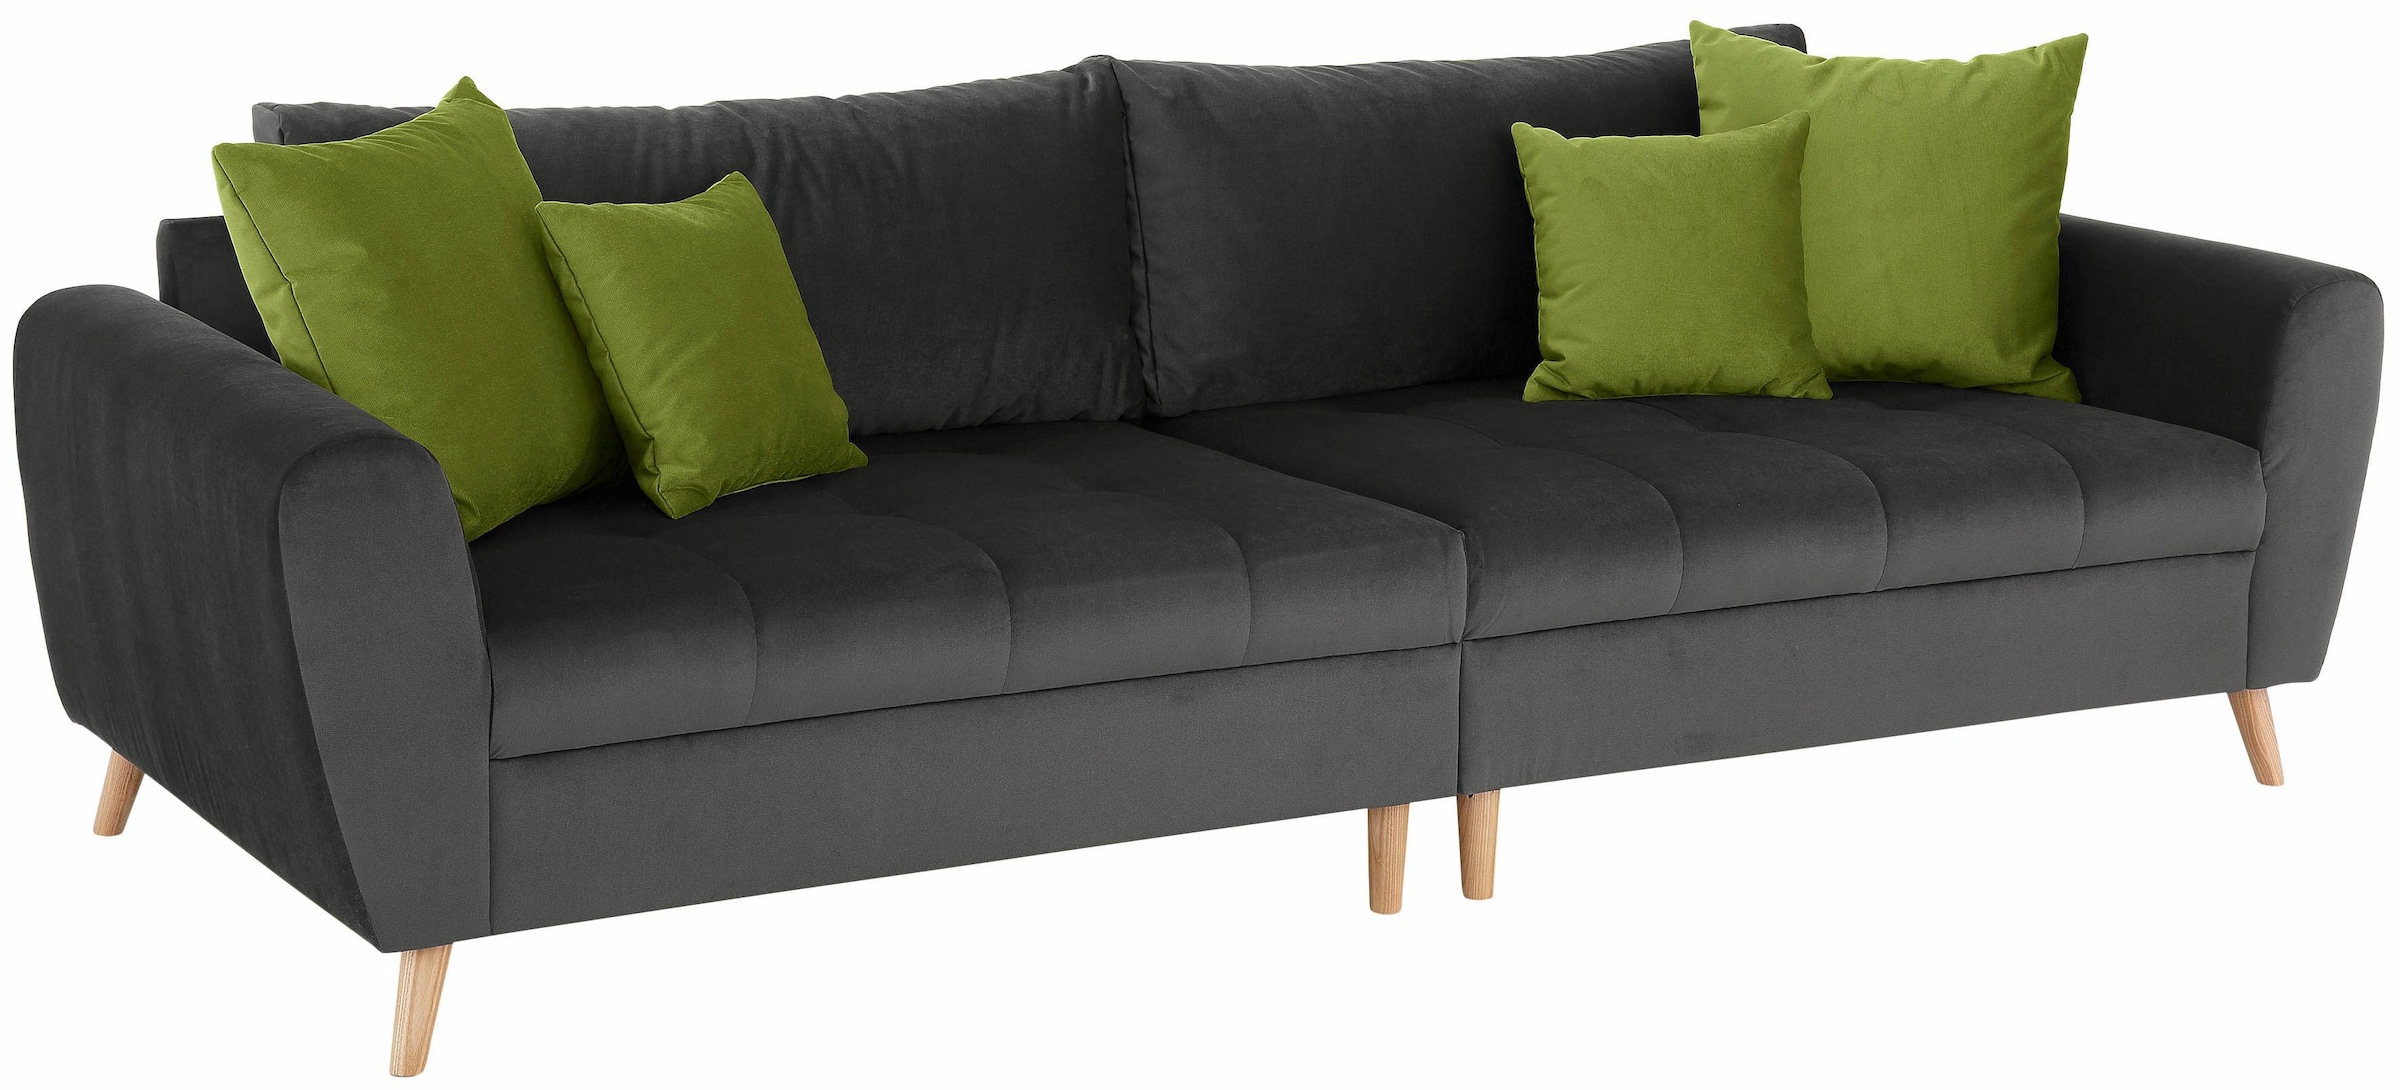 Home affaire Big-Sofa »Penelope«, feine Steppung, lose Kissen,  skandinavisches Design online kaufen